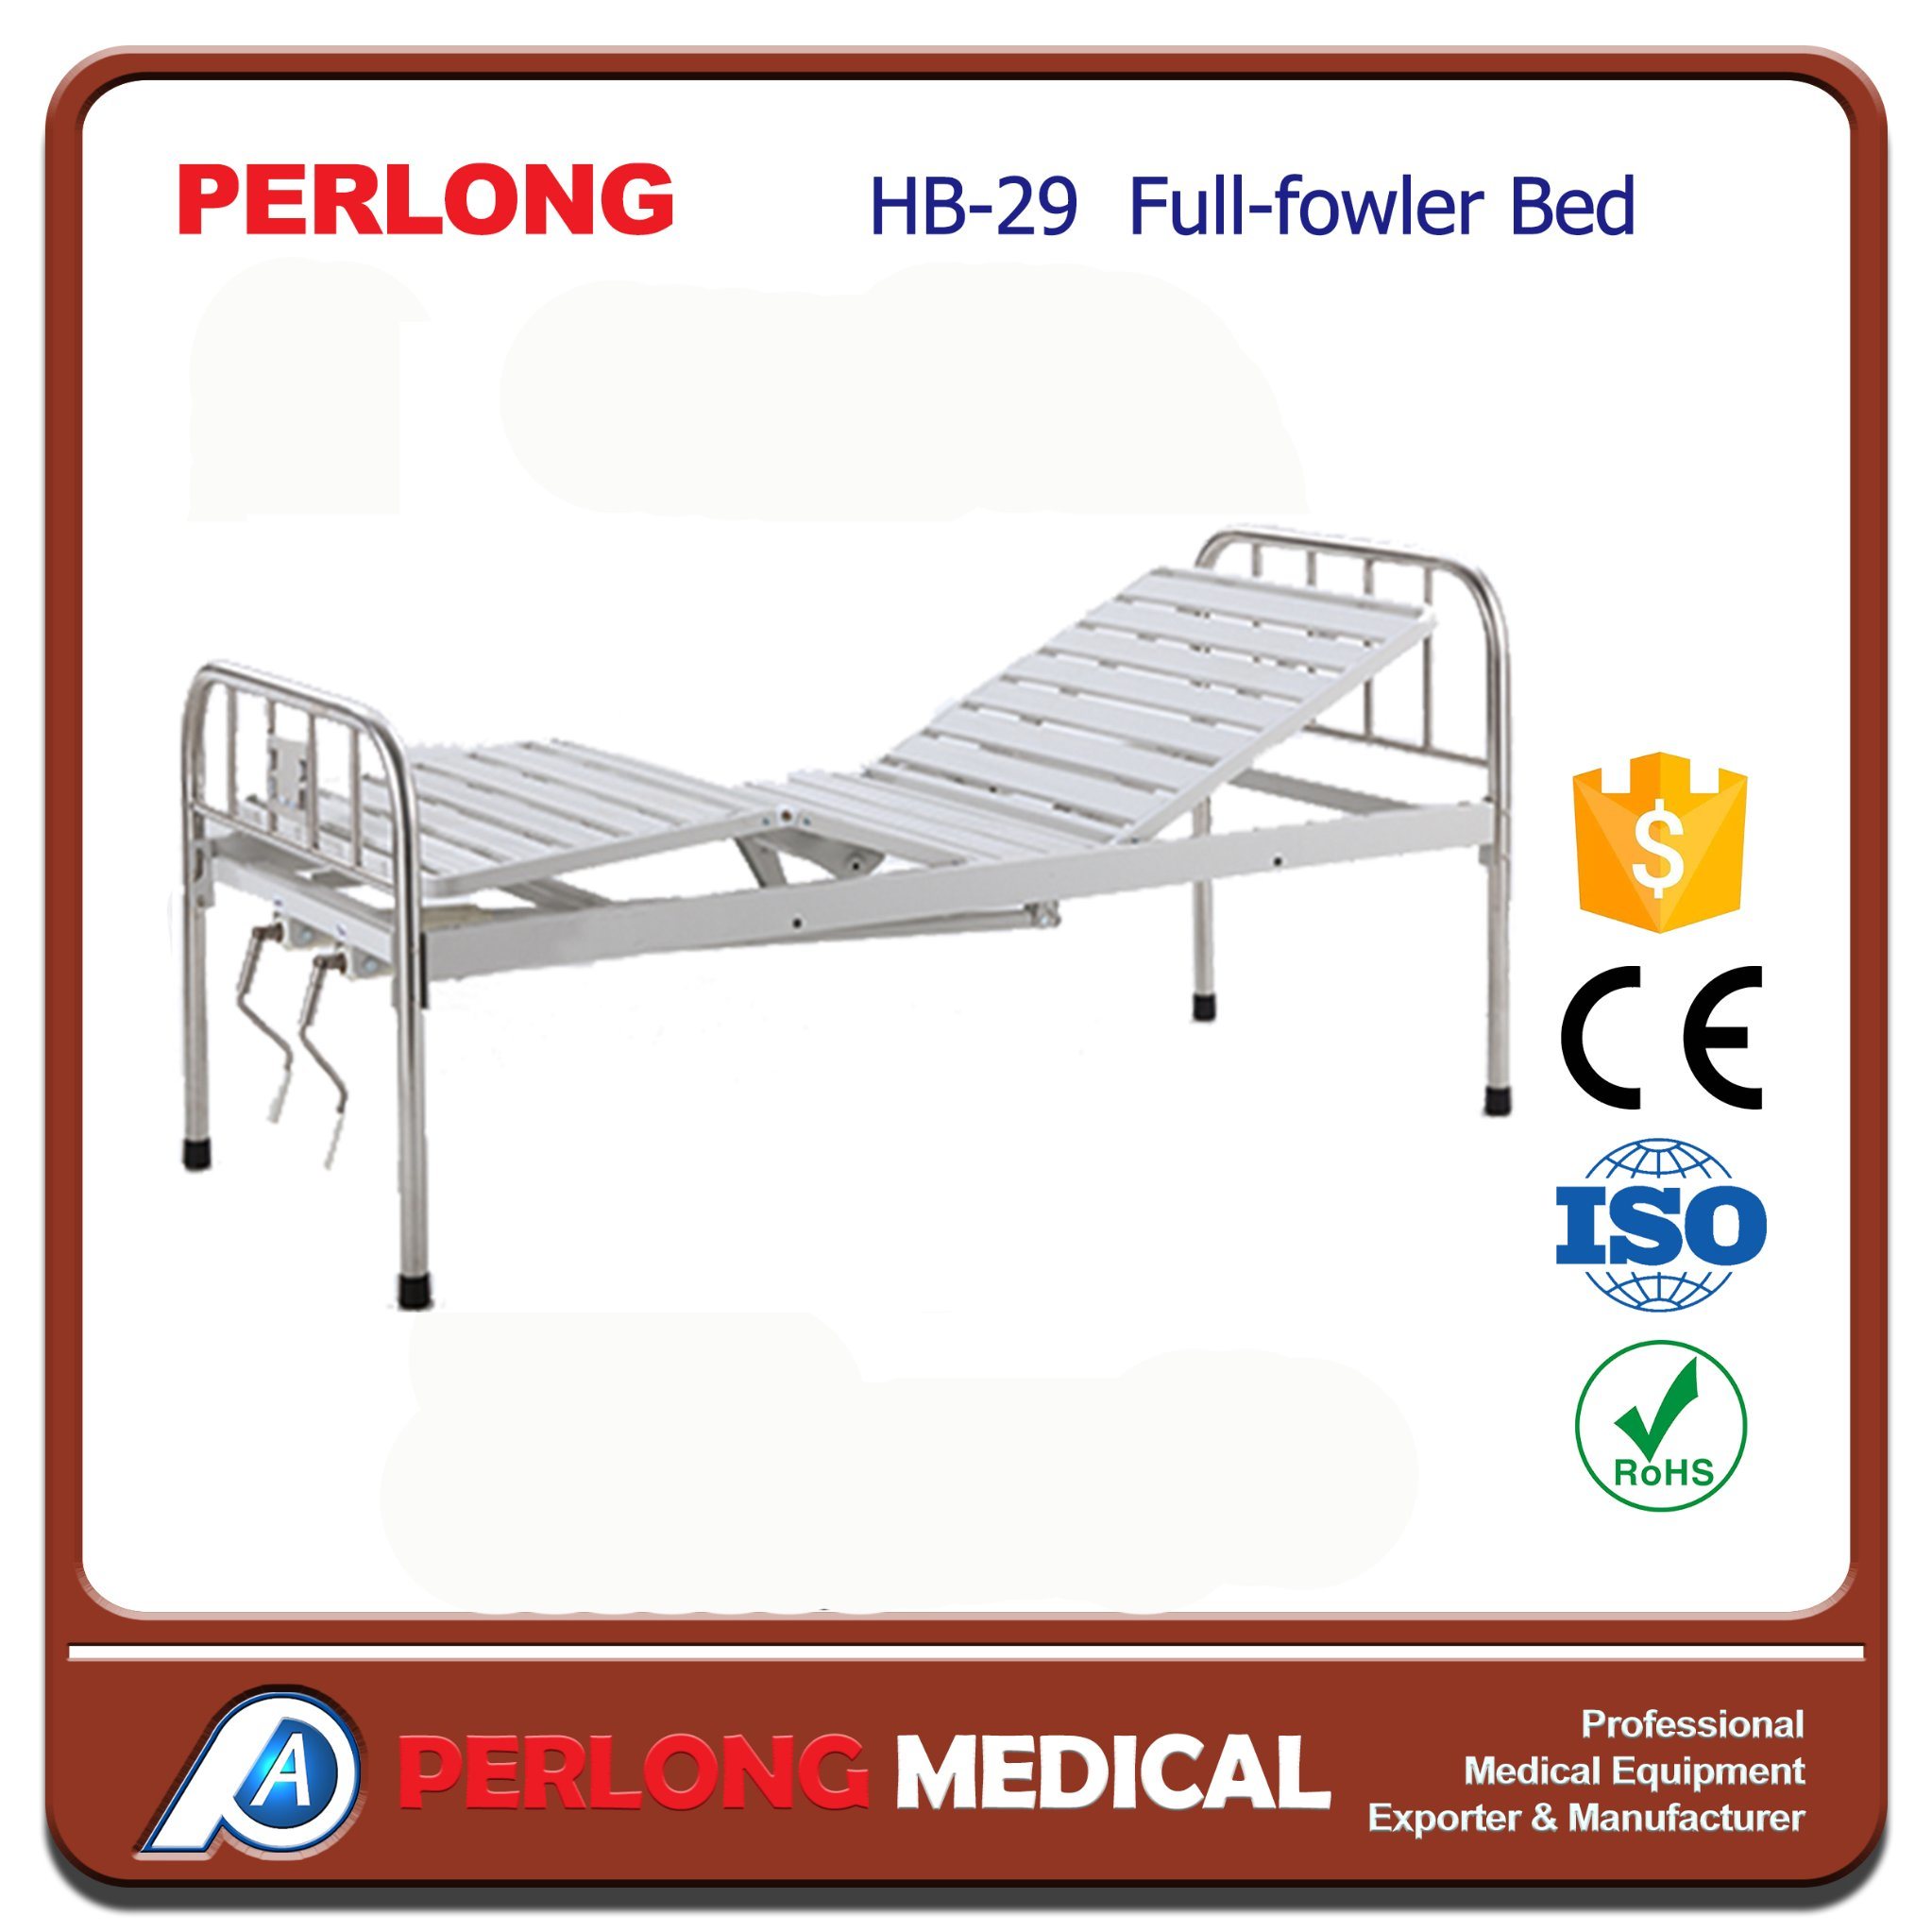 2017 Hot Selling Hospital Bed Full-Flower Bed Hb-29